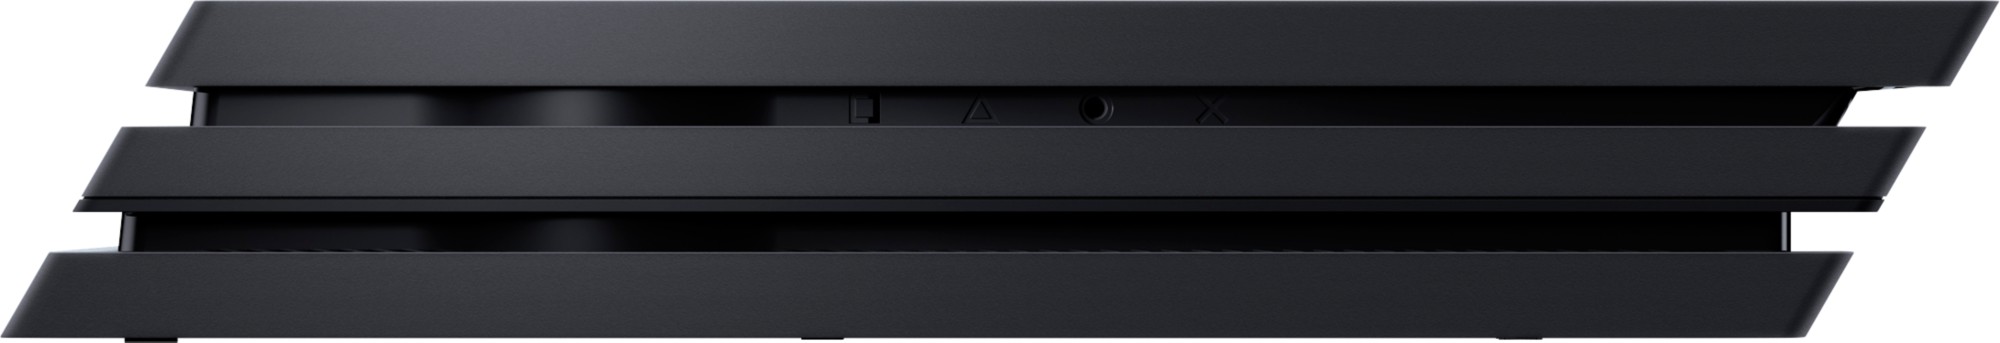 PlayStation 4 Pro (1TB, Jet Black) + Подставка